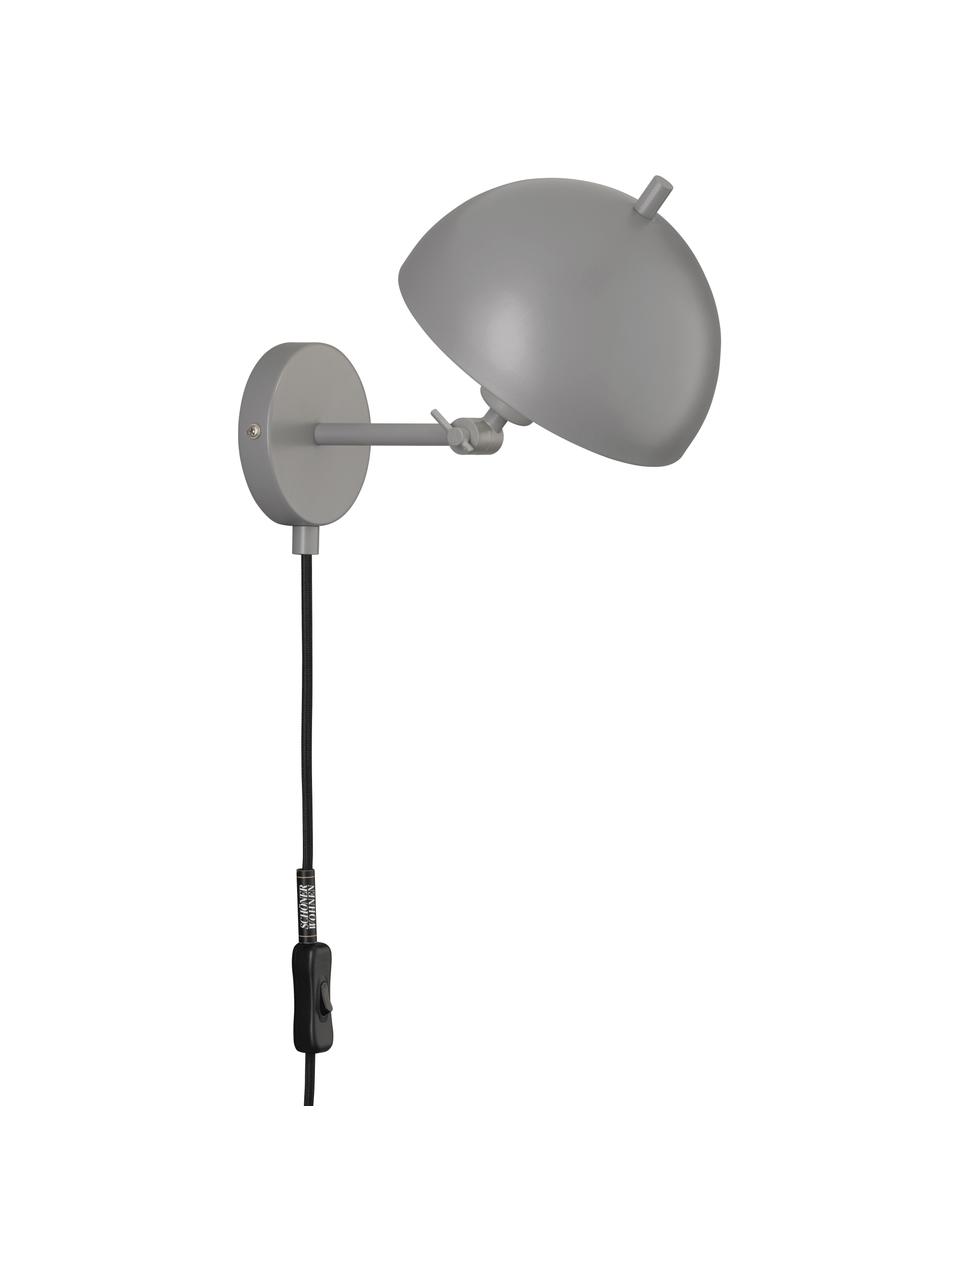 Retro-Wandleuchte Kia mit Stecker, Lampenschirm: Metall, beschichtet, Grau, 20 x 25 cm